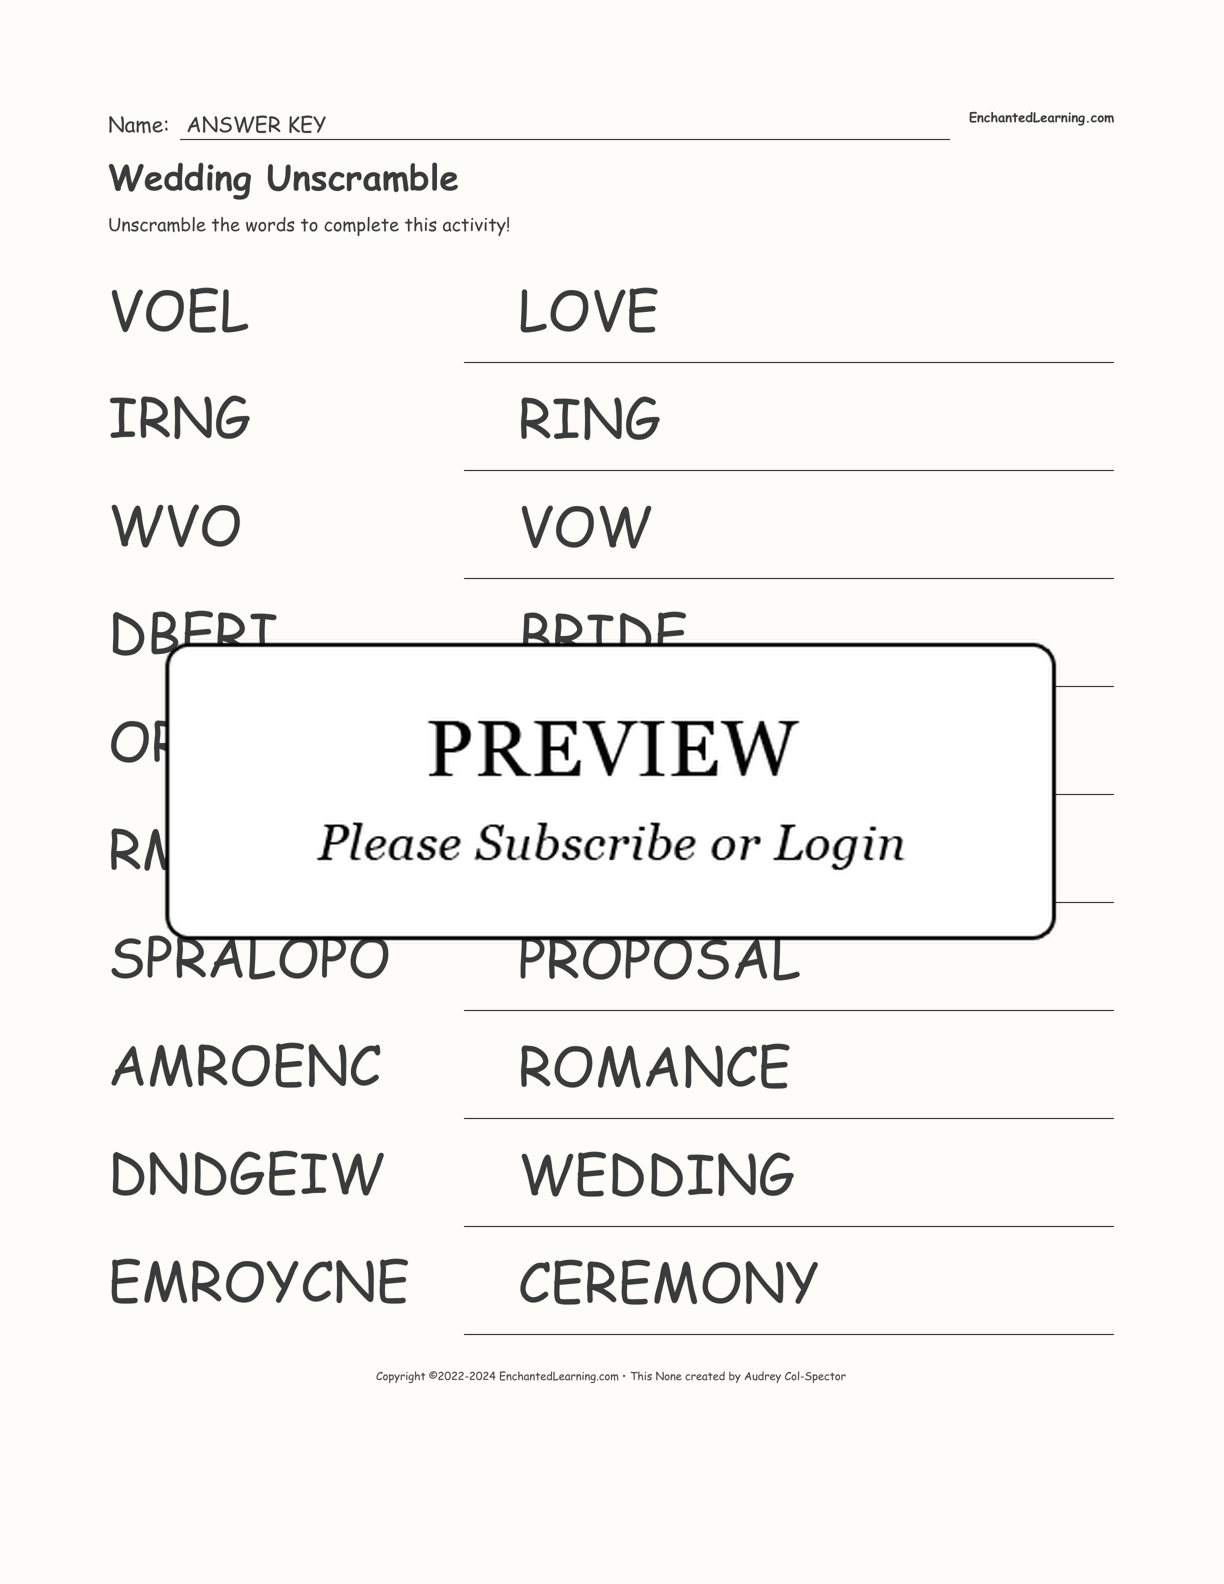 Wedding Unscramble interactive worksheet page 2